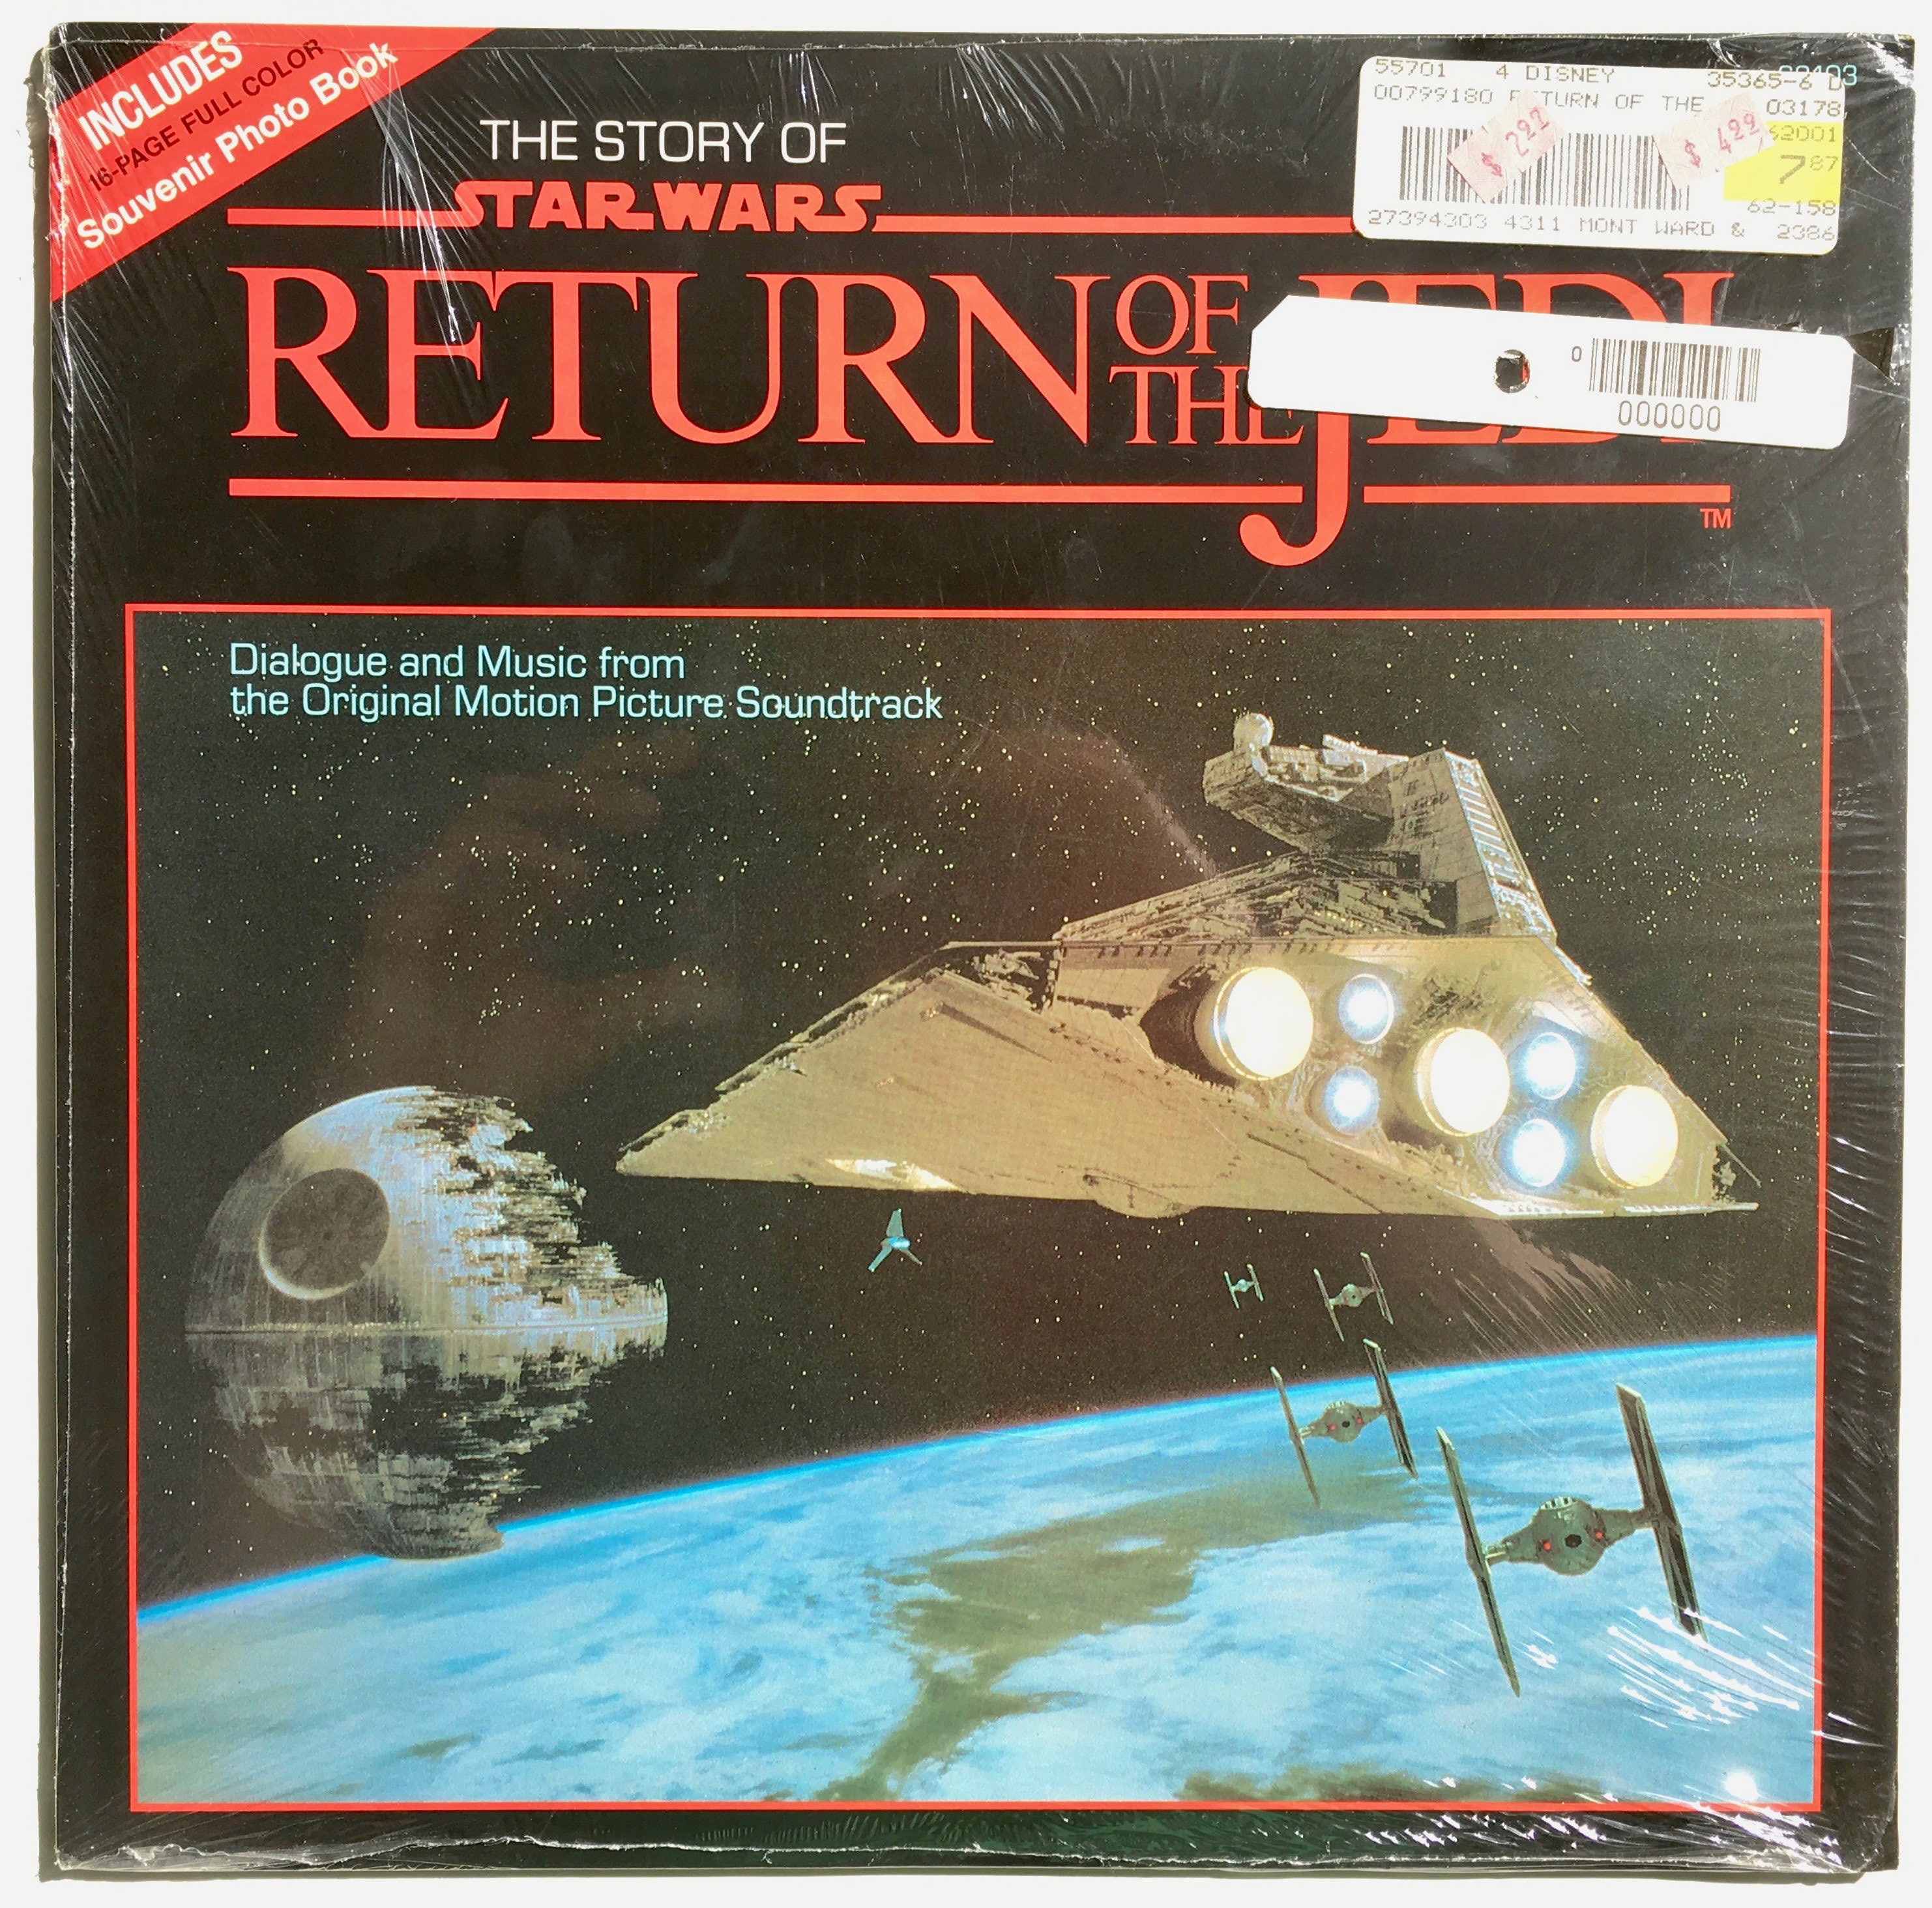 The Story of the Jedi LP Vinyl Record Album - Etsy